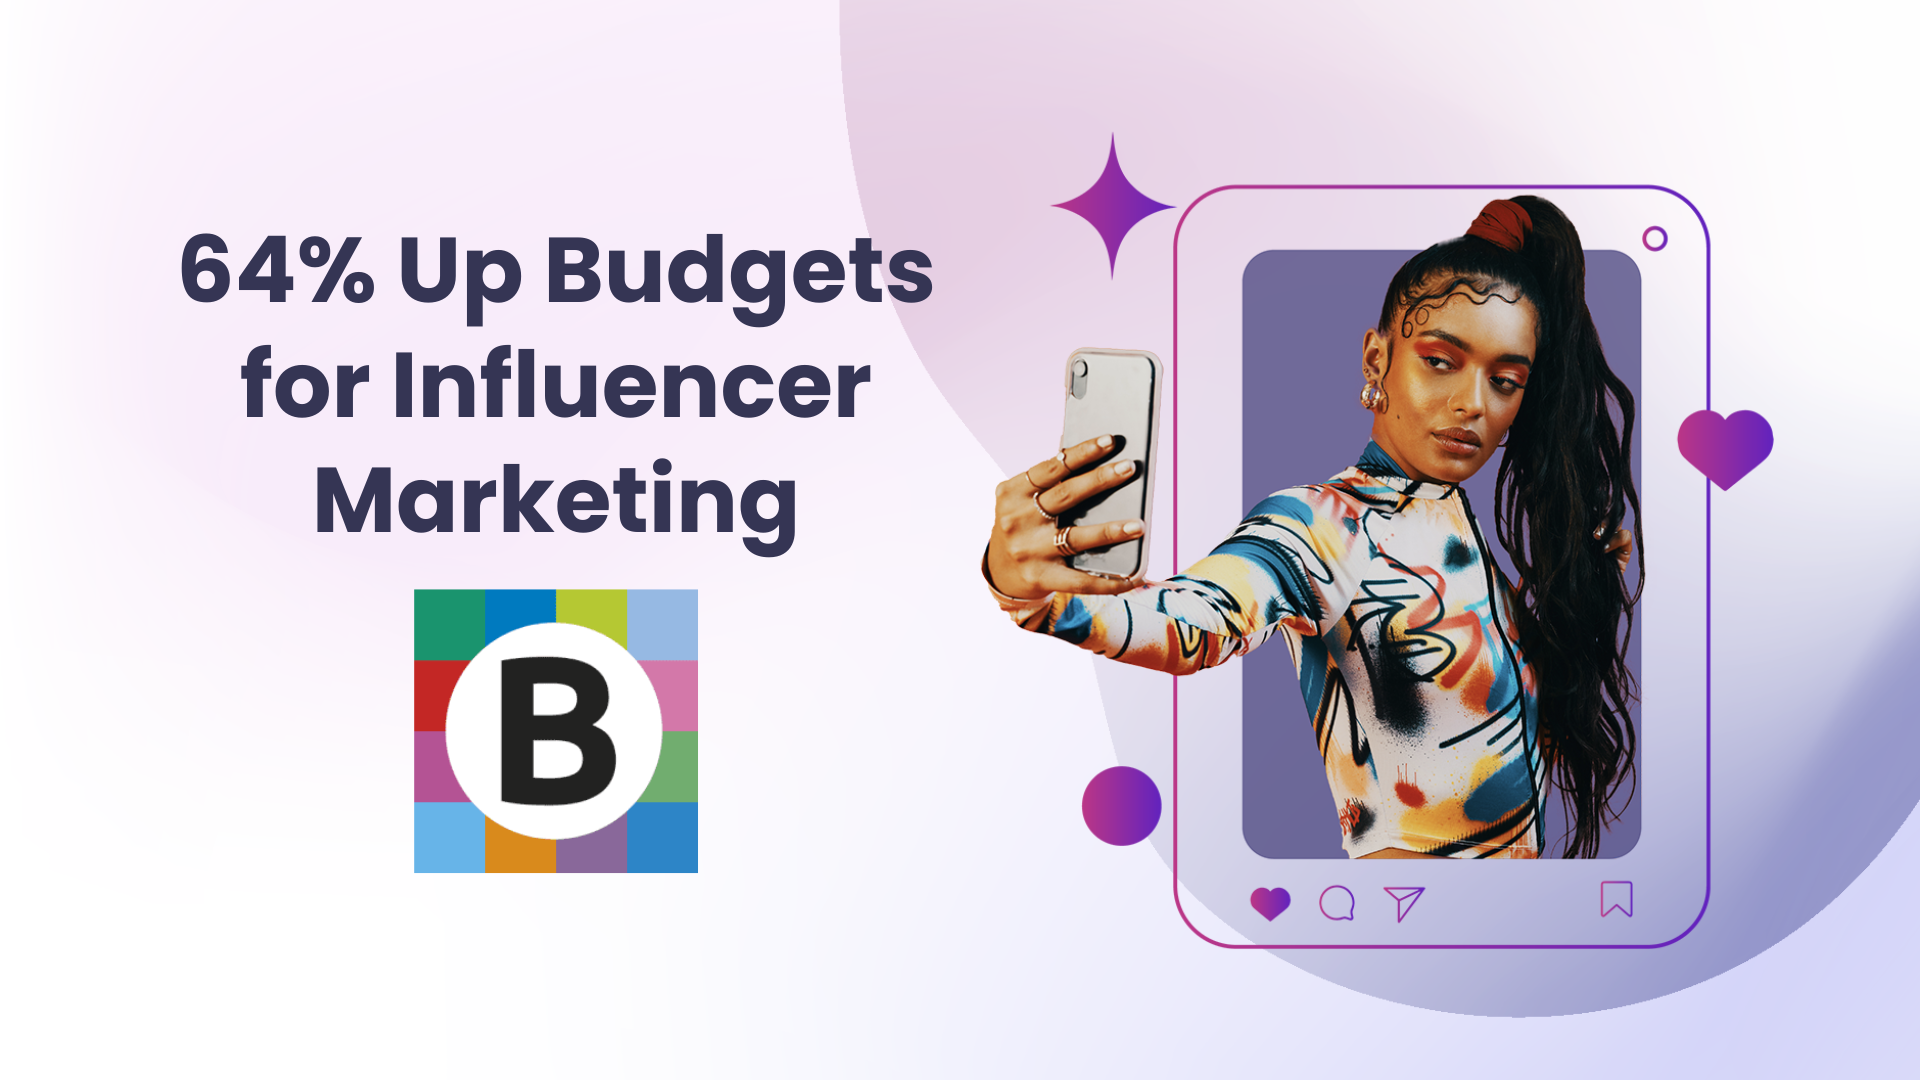 64% Up Budgets for Influencer Marketing